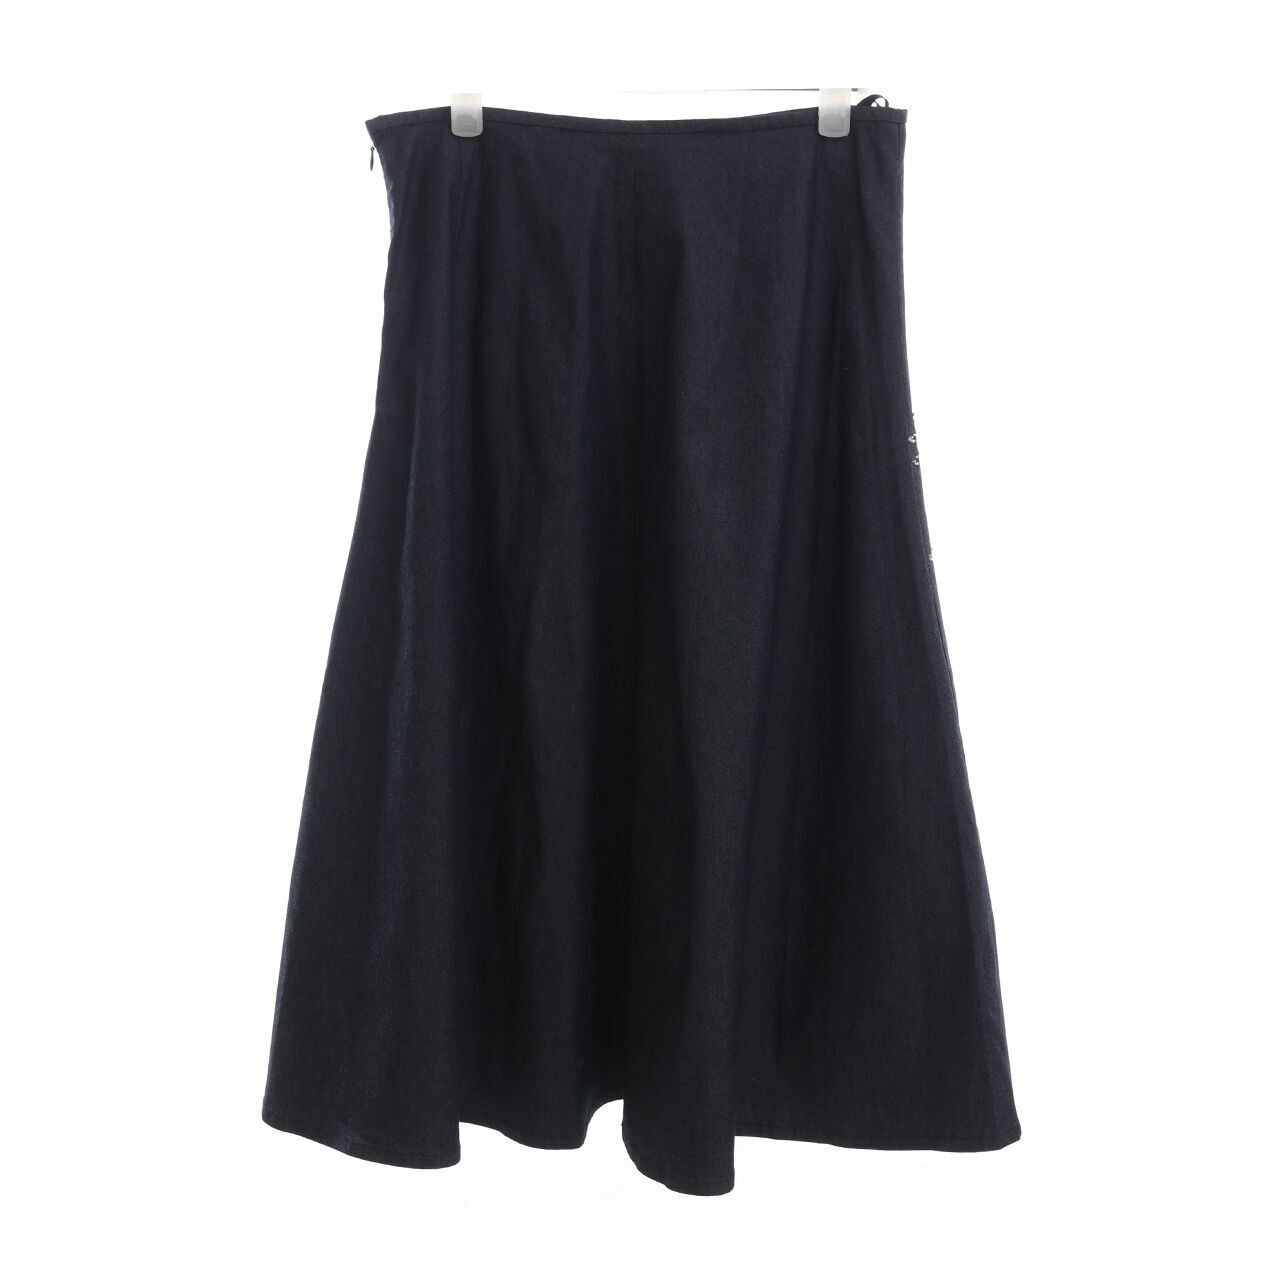 Allure Black Midi Skirt